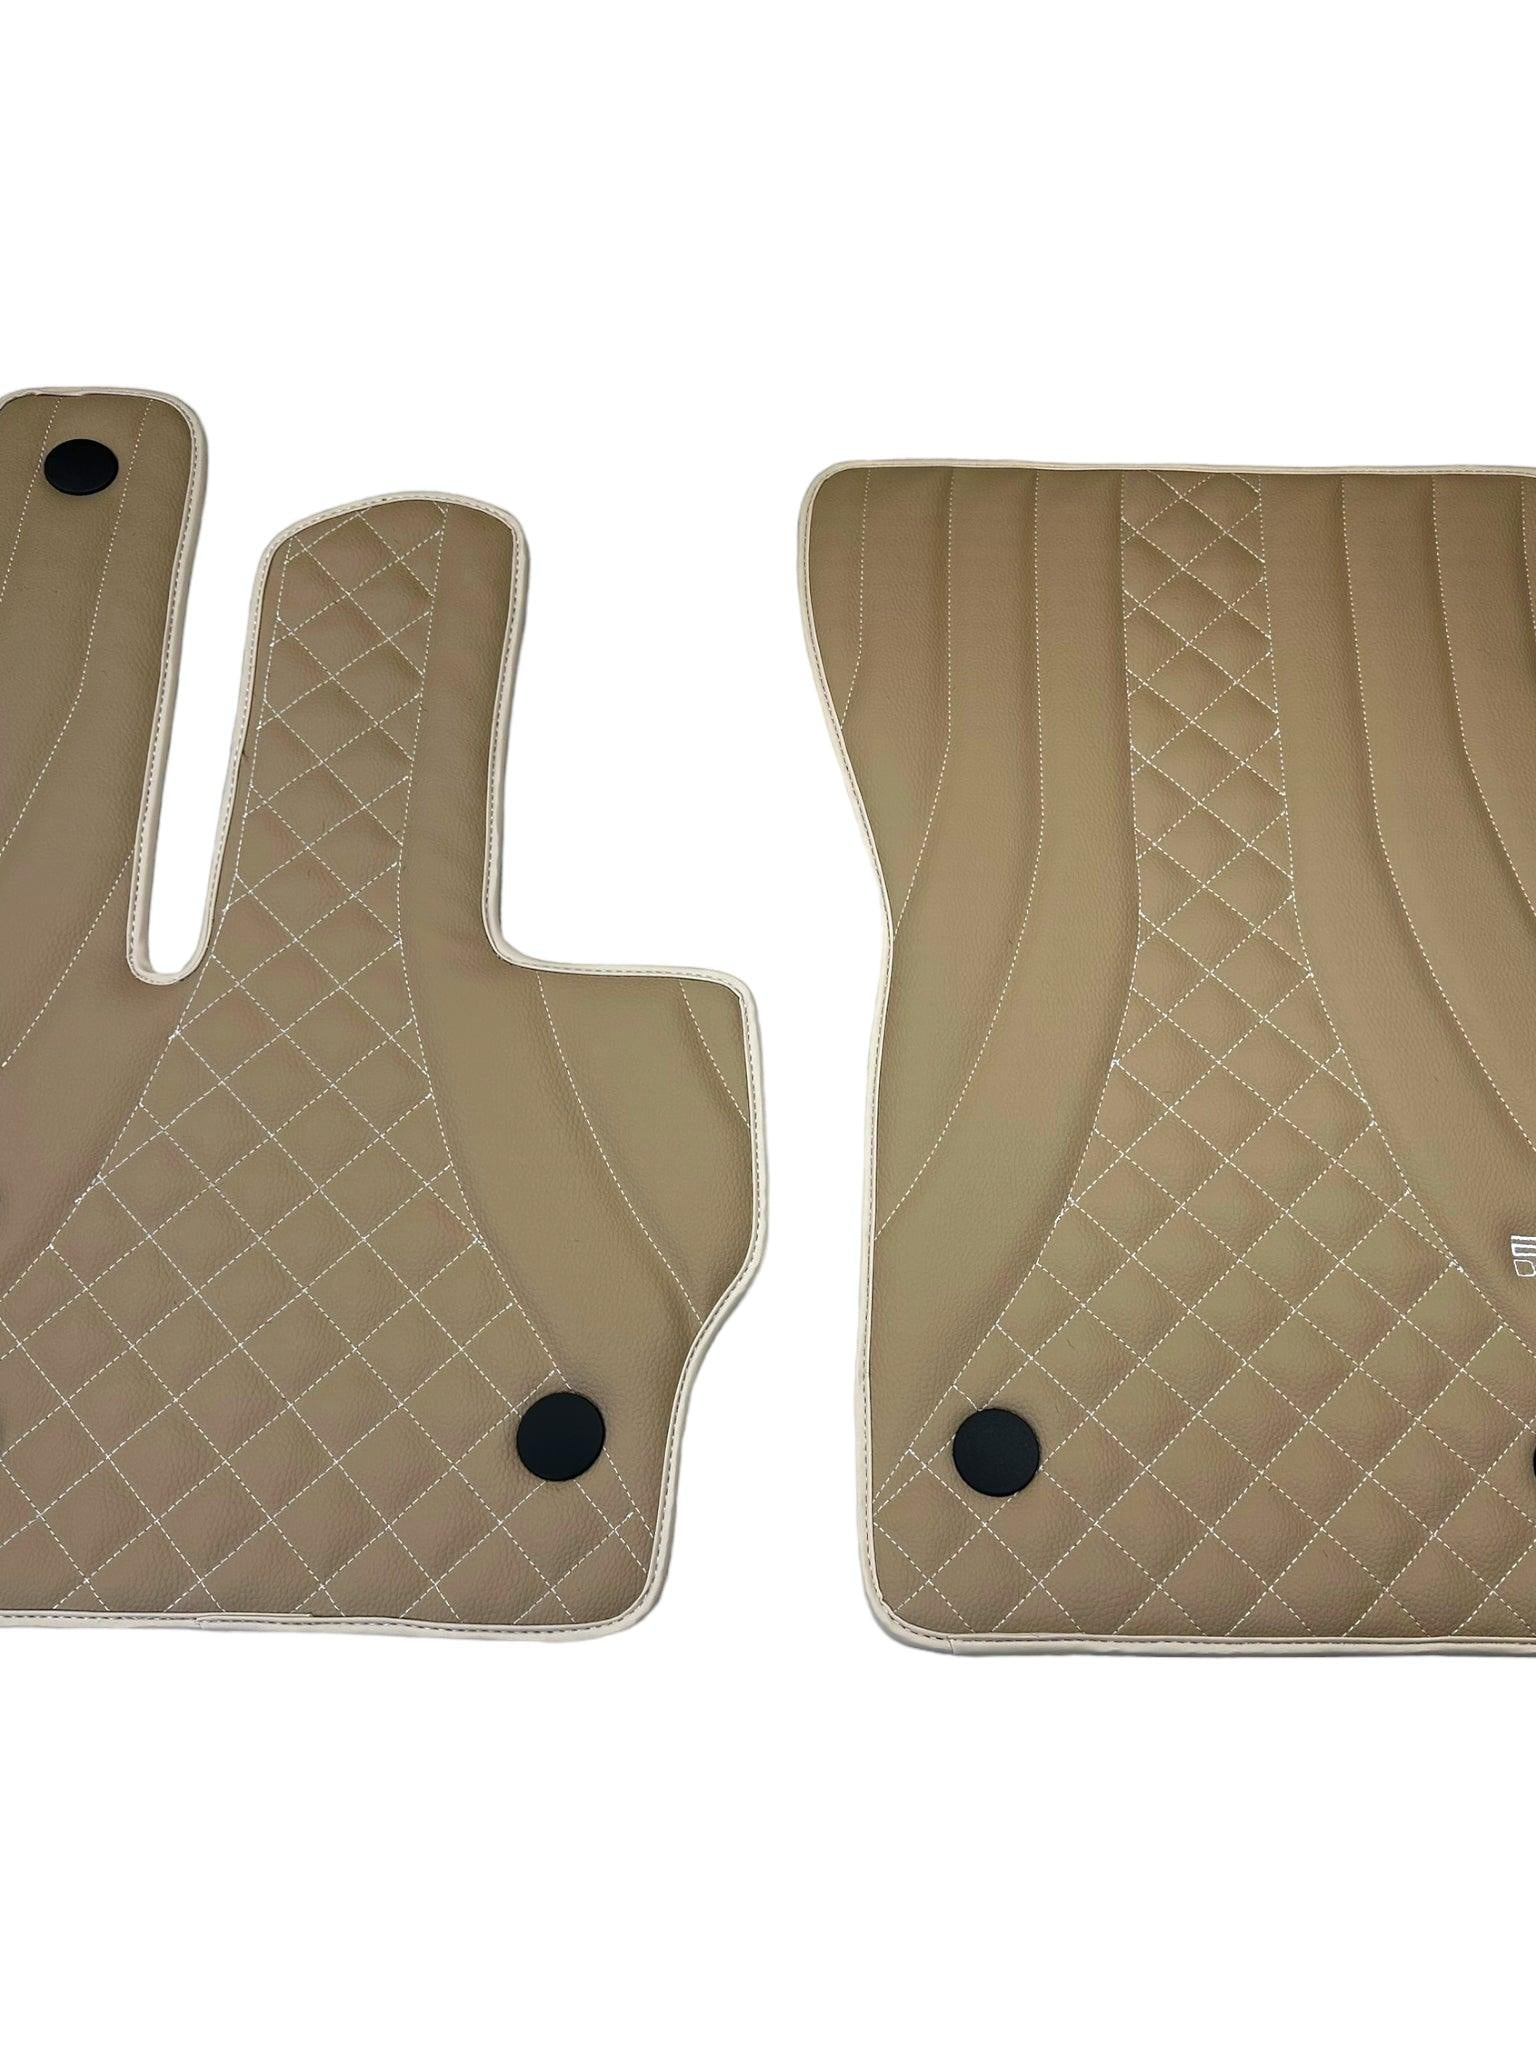 Beige Leather Floor Mats for Mercedes-Benz W463 (2018-2023) ER56 Design